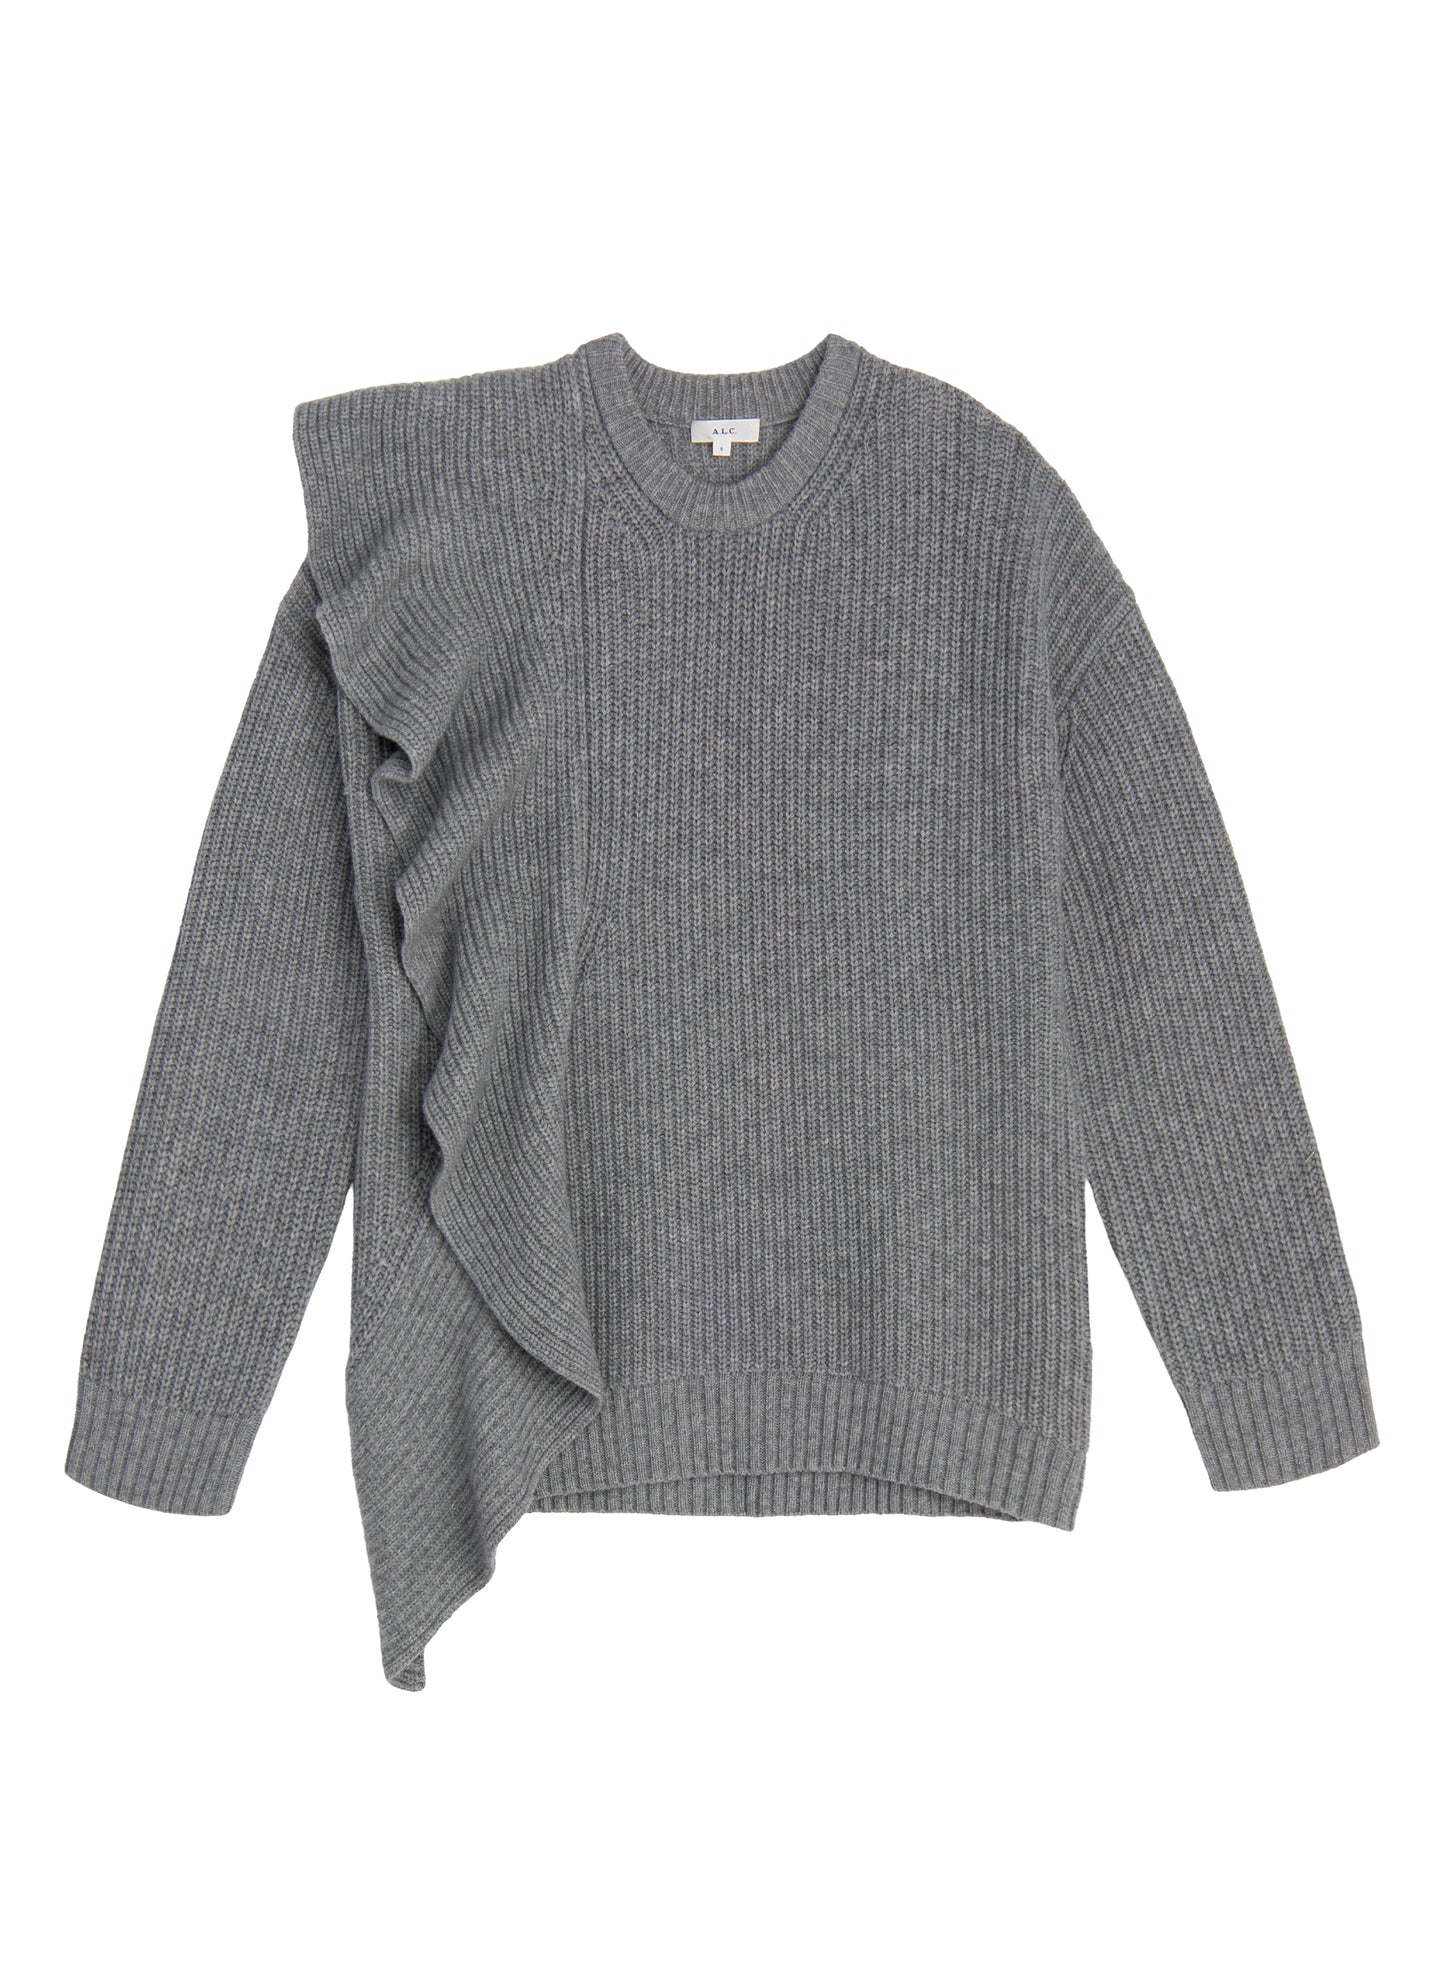 flatlay of grey sweater with ruffle